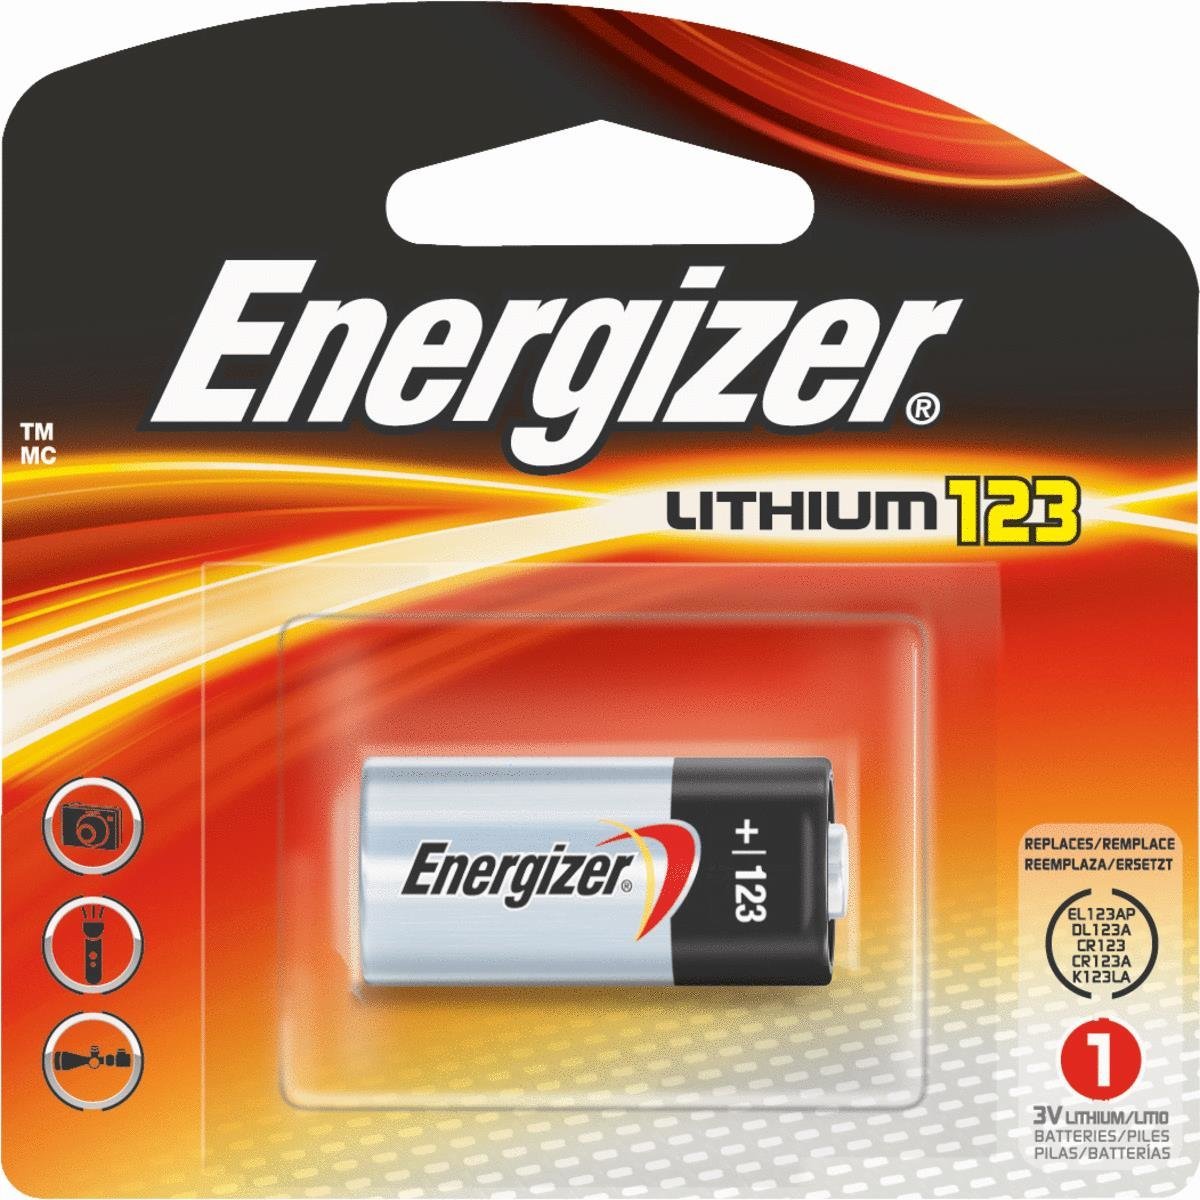 Energizer Lithium 123 Battery